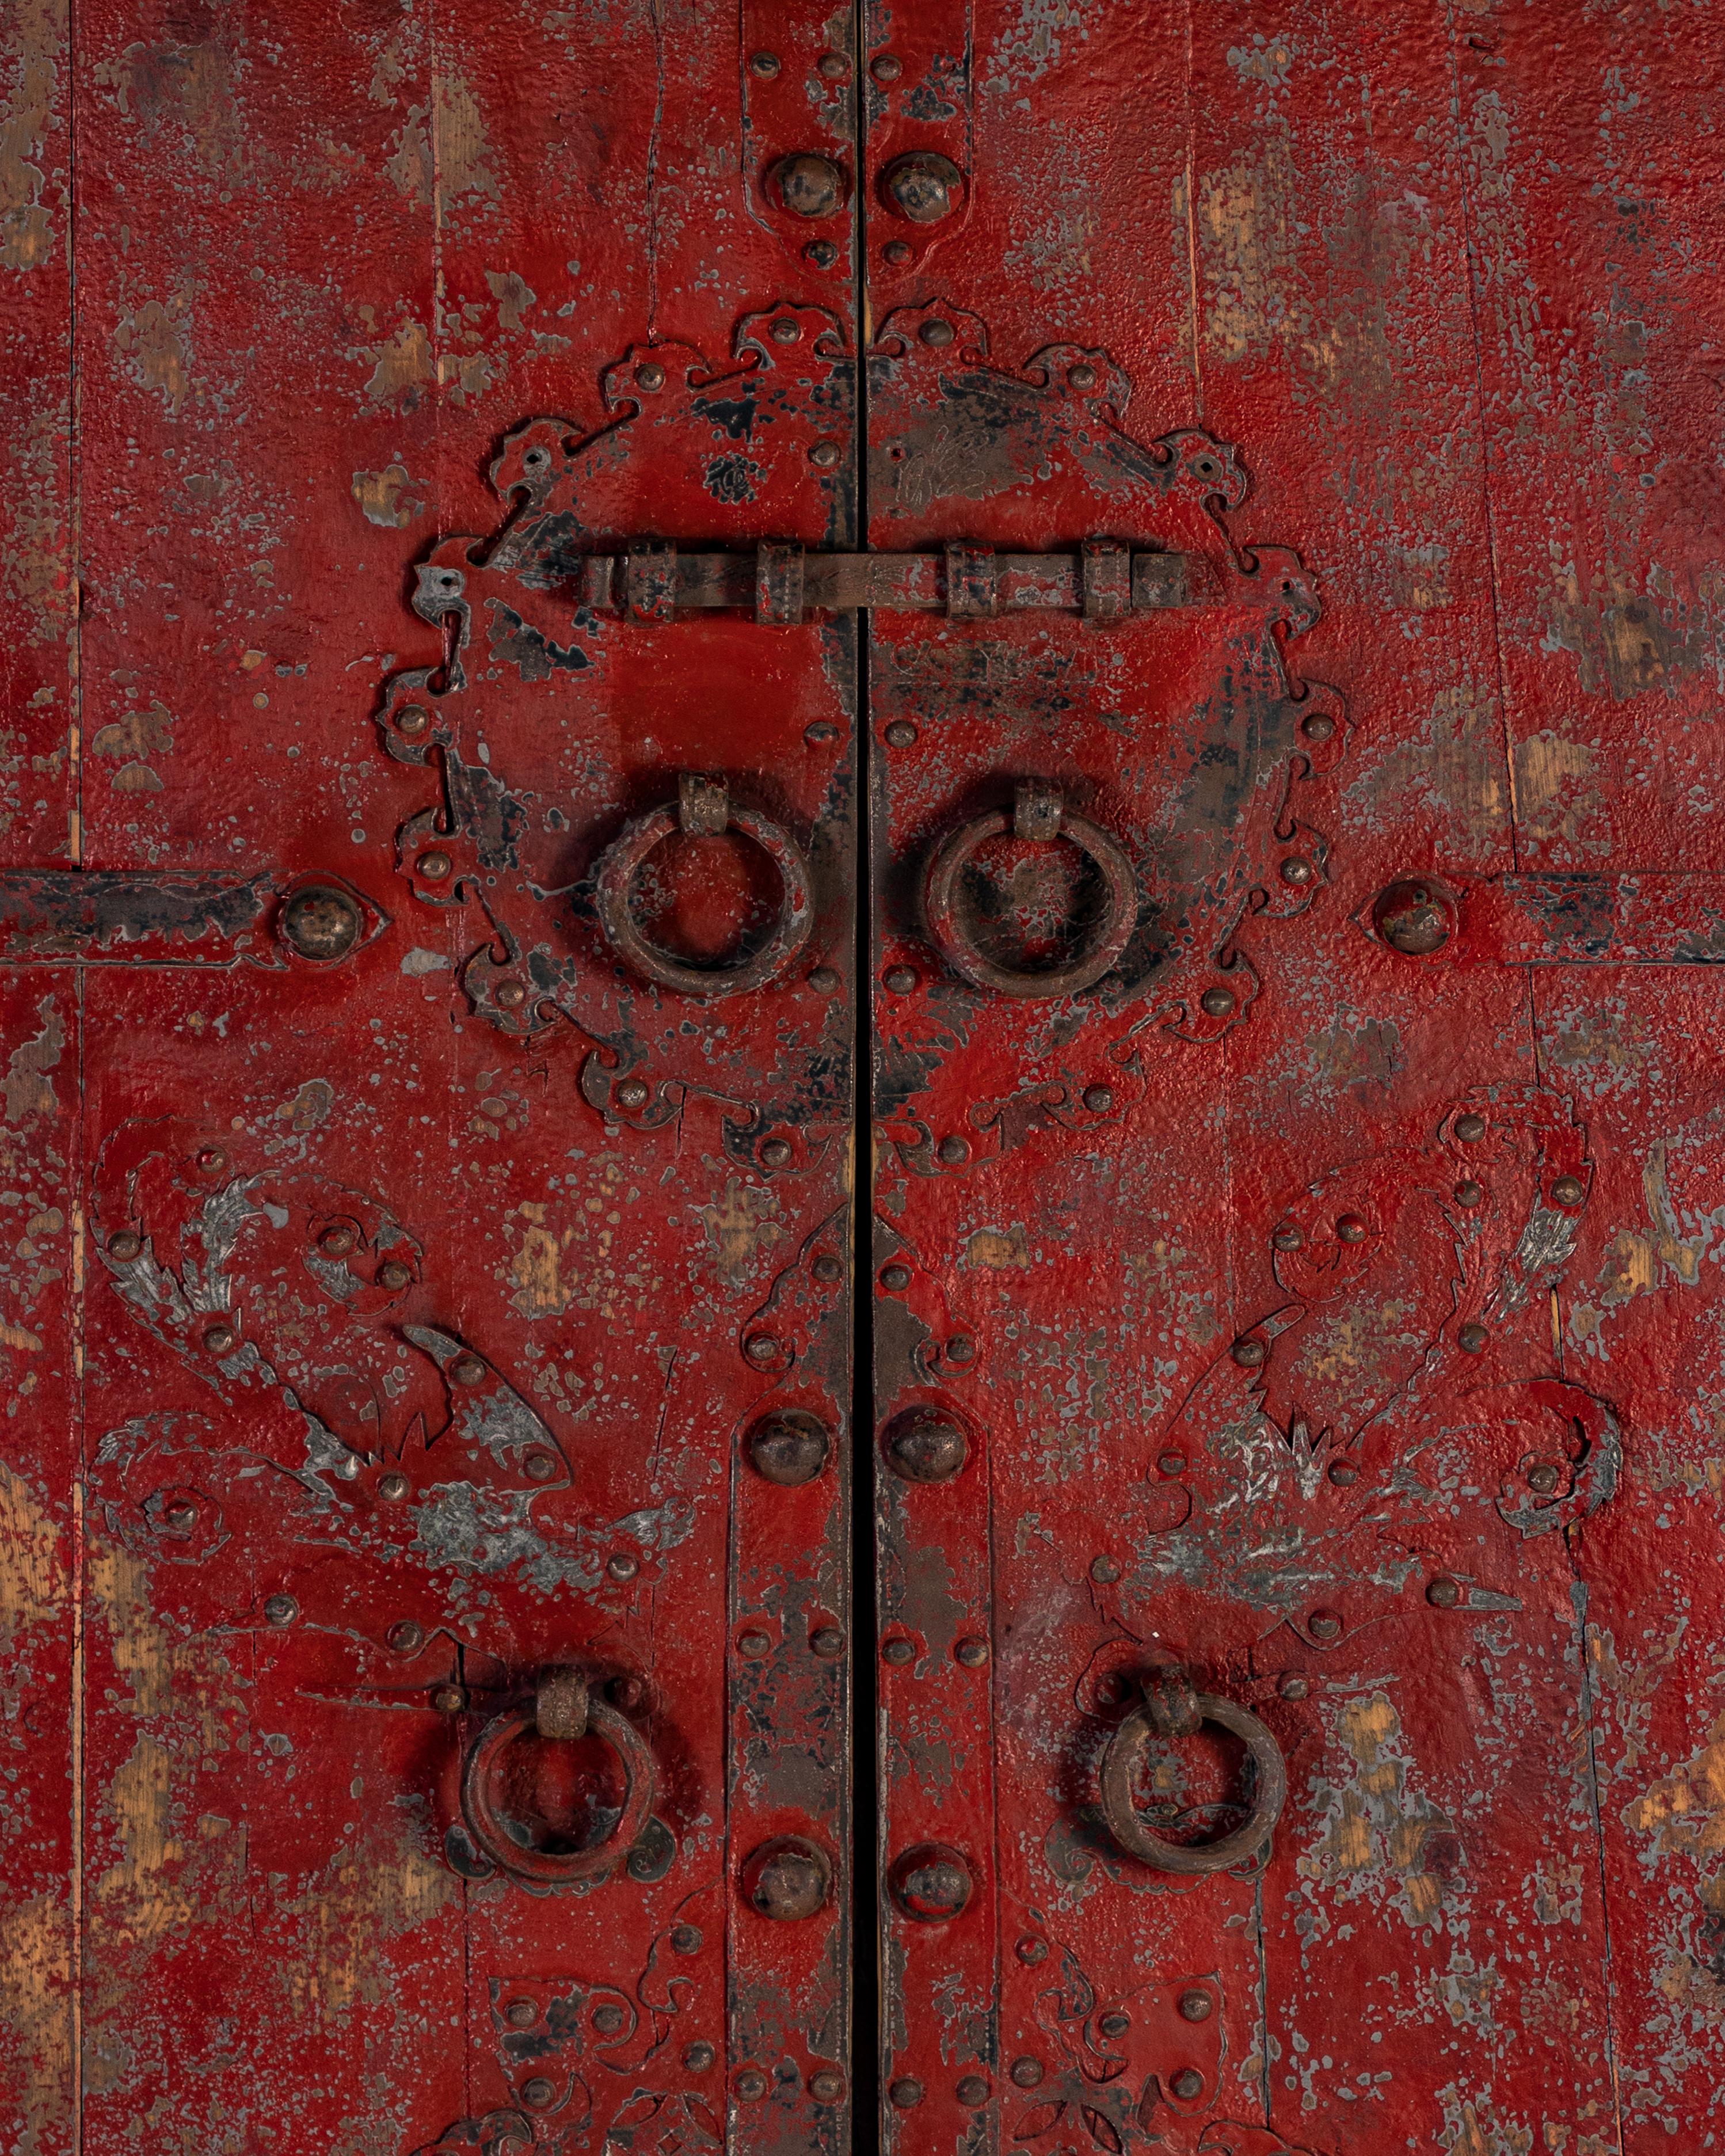 Patinated Pair of Red Patina South Asian Doors Repurposed as Wall Decor